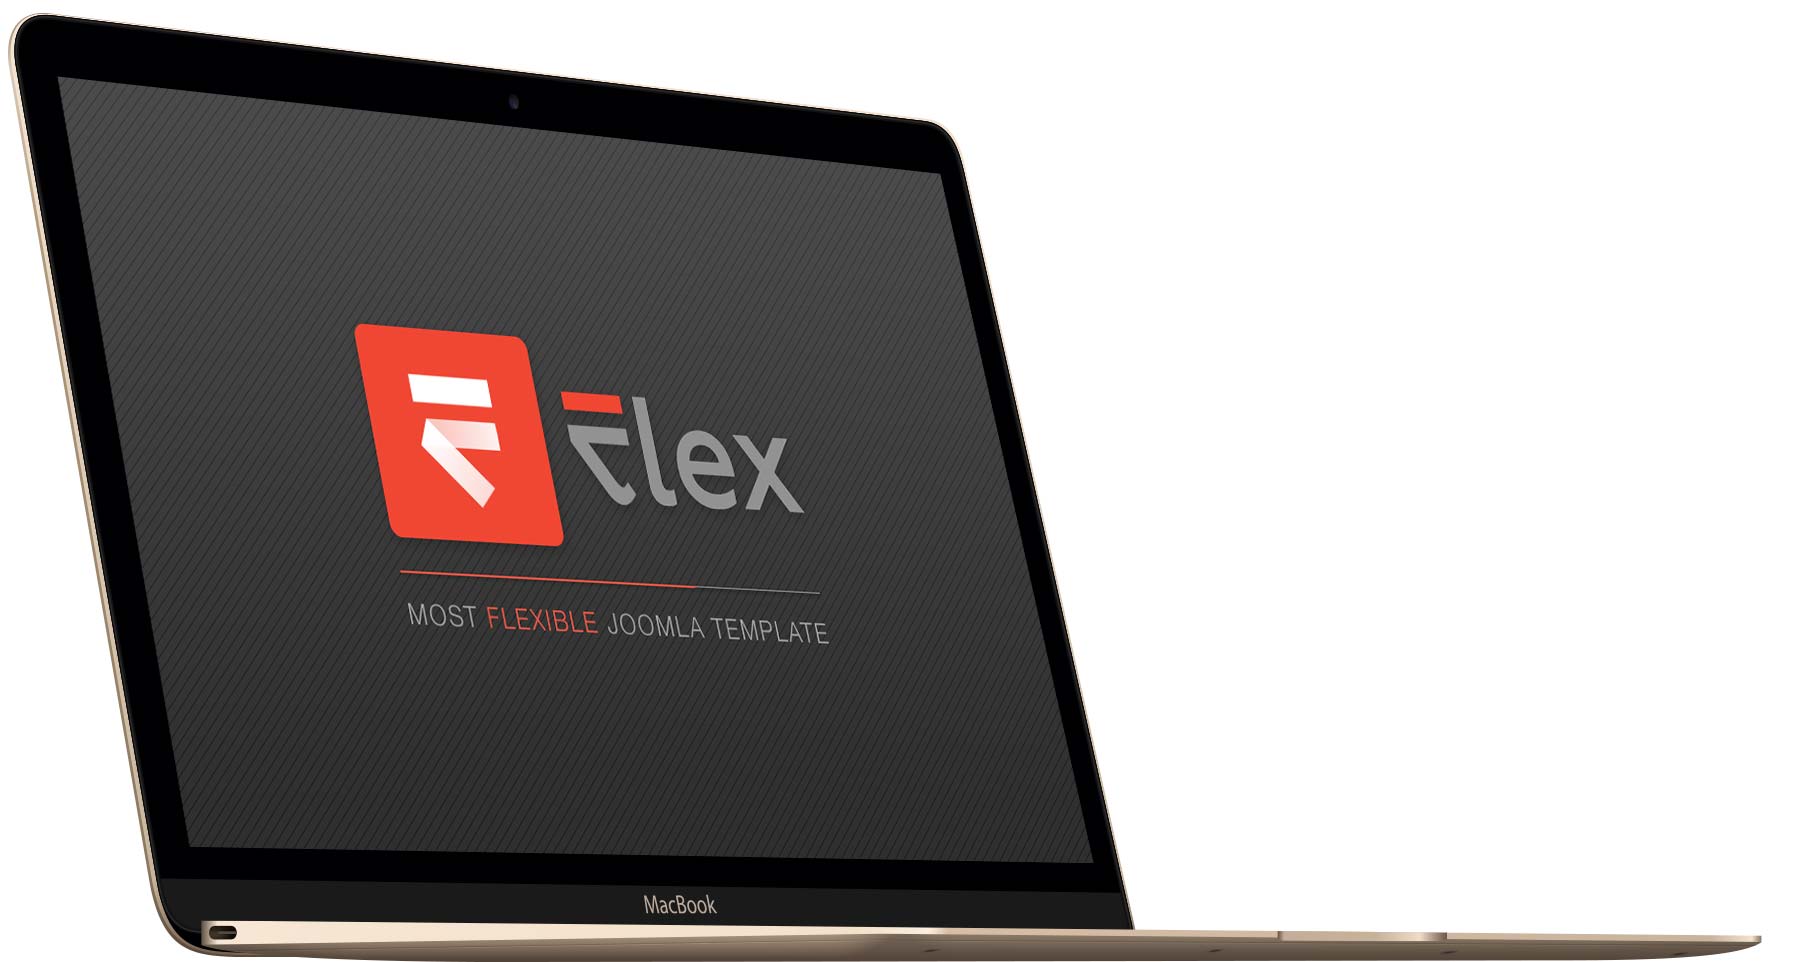 flex-mac-left.jpg - 85,32 kB